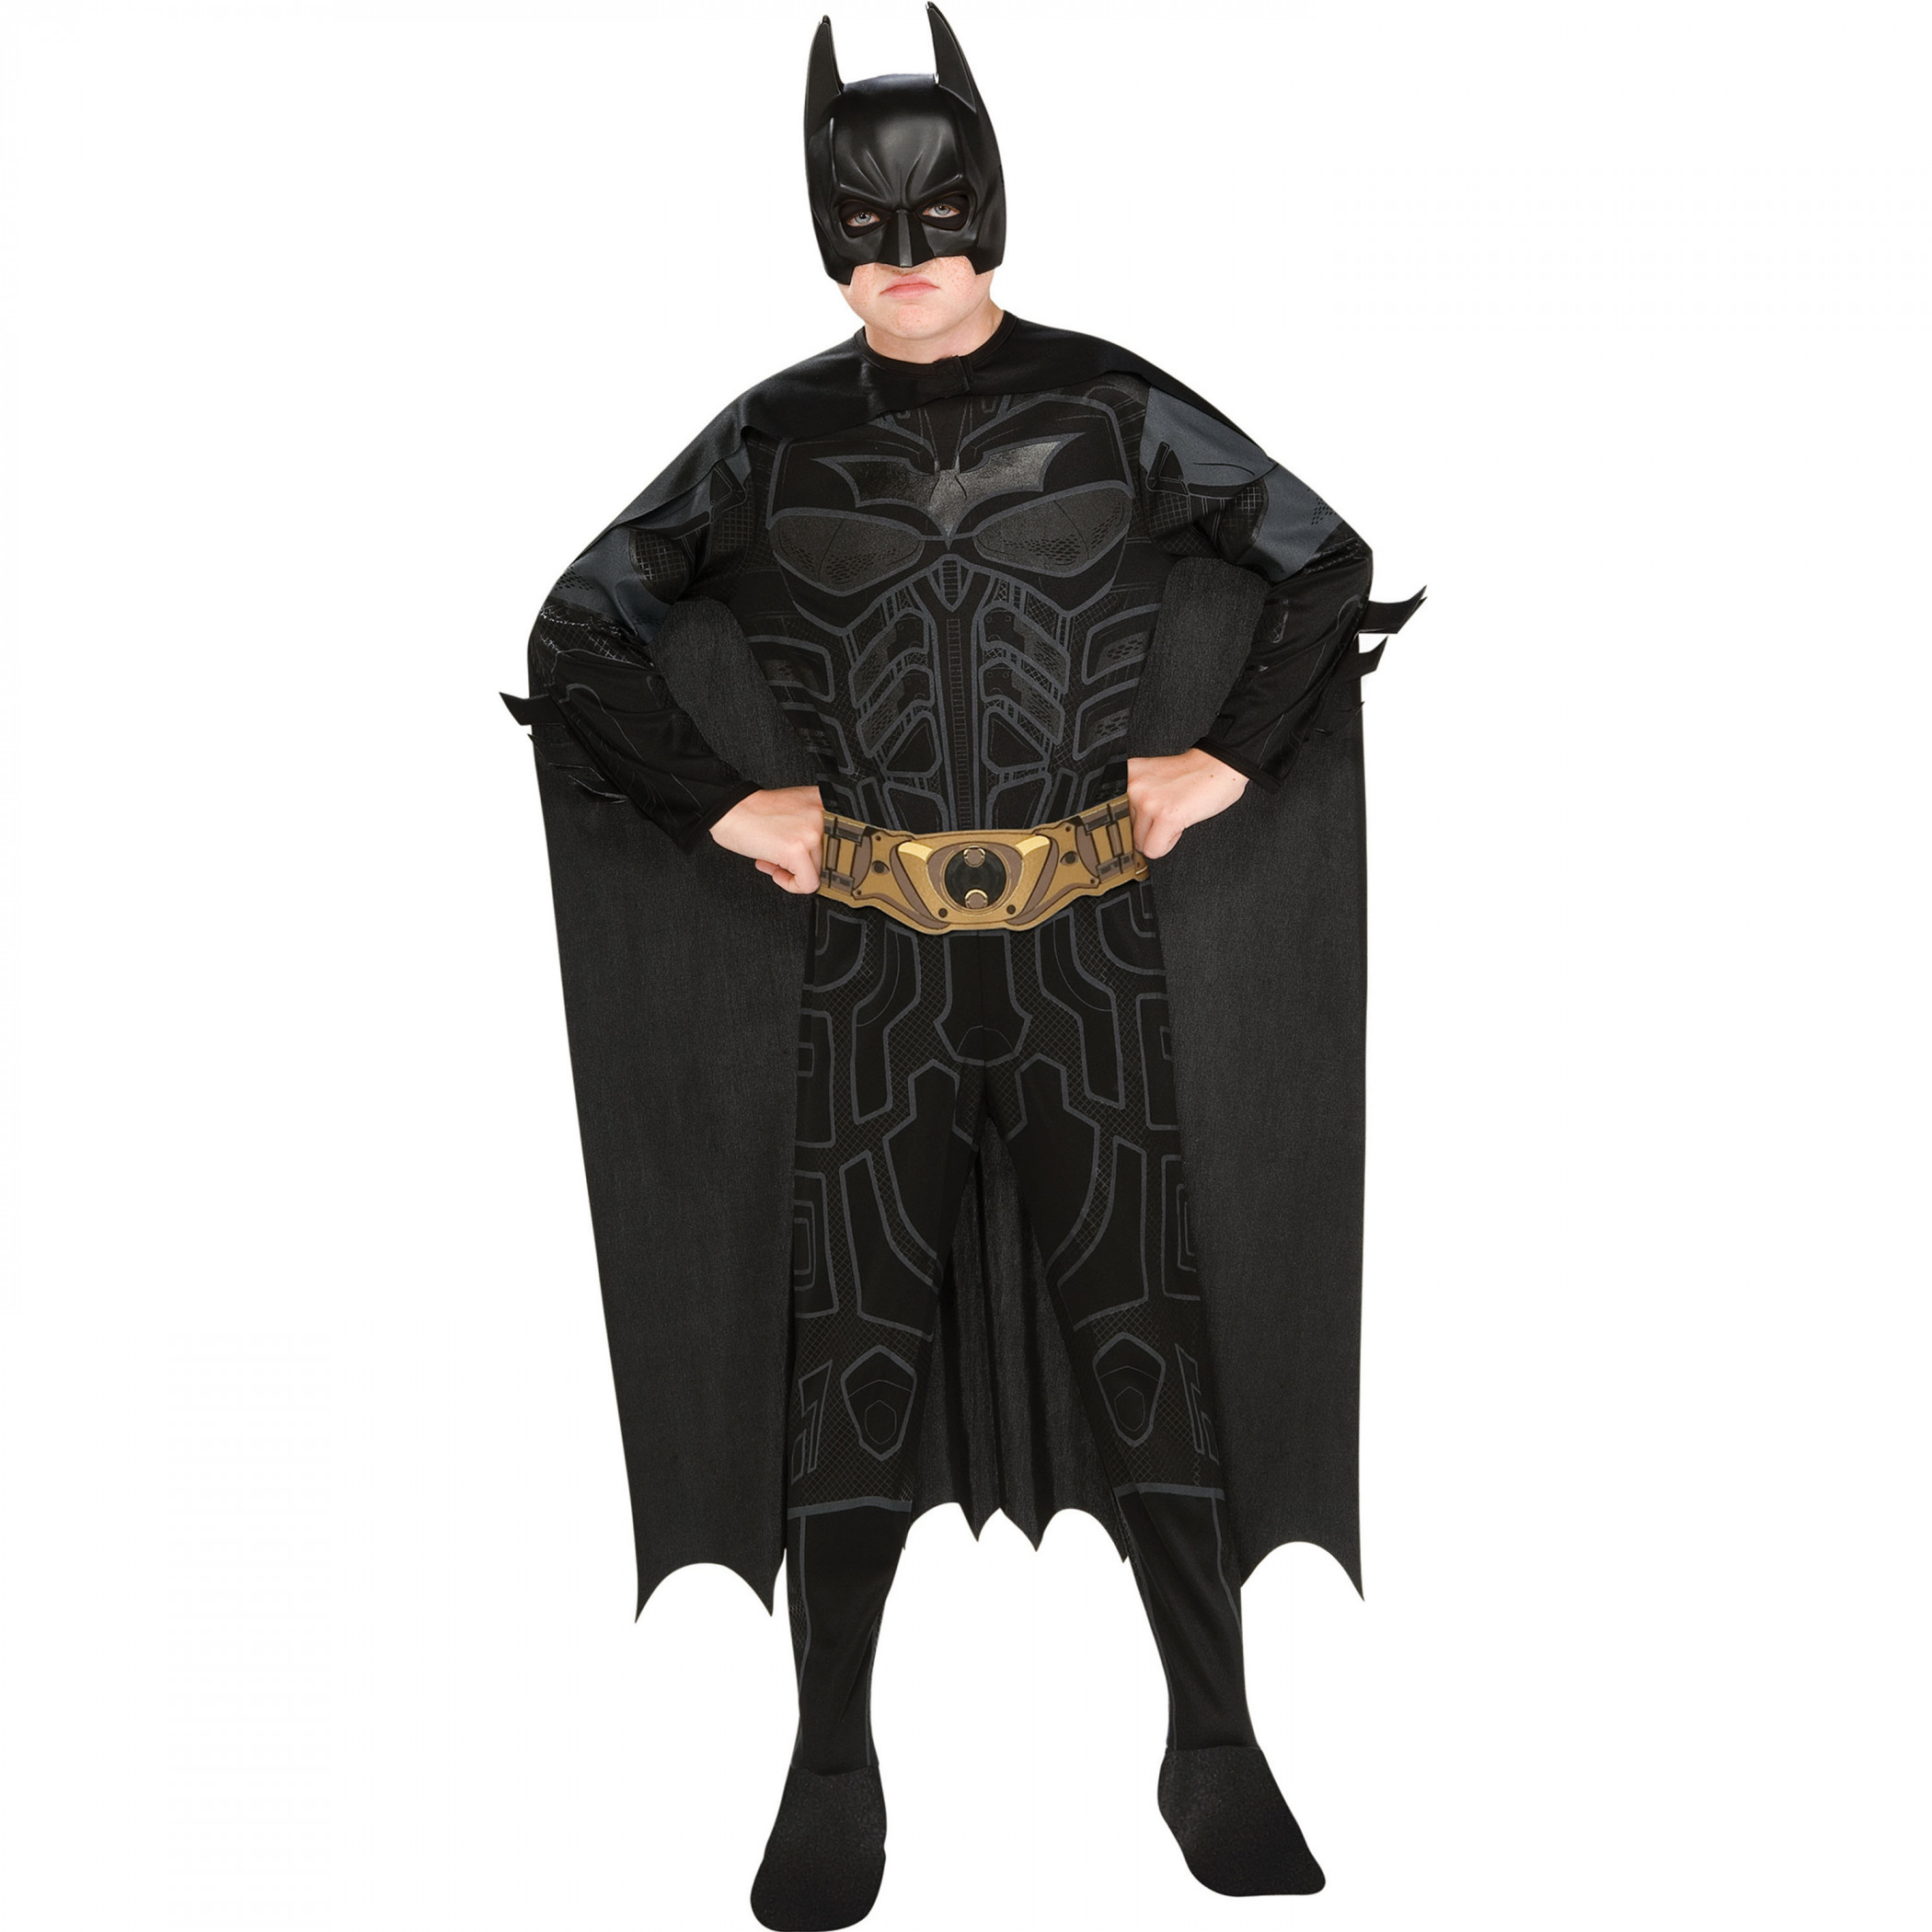 Batman Full Suit with Cape Deluxe Costume